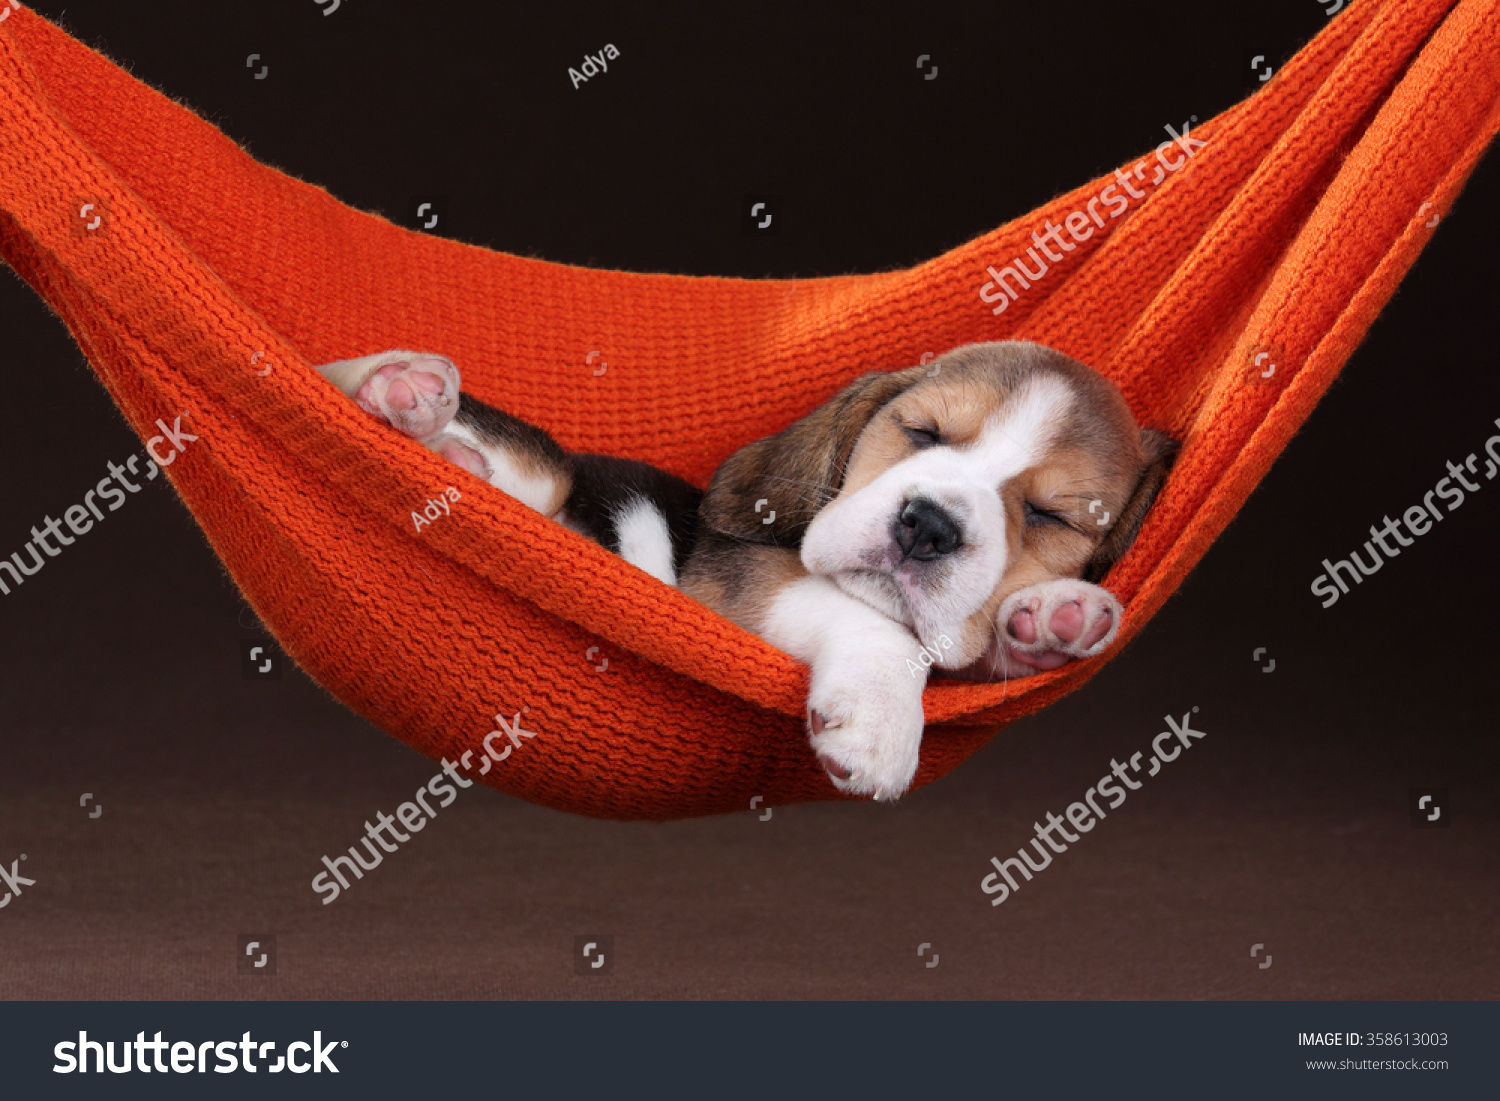 puppy hammock